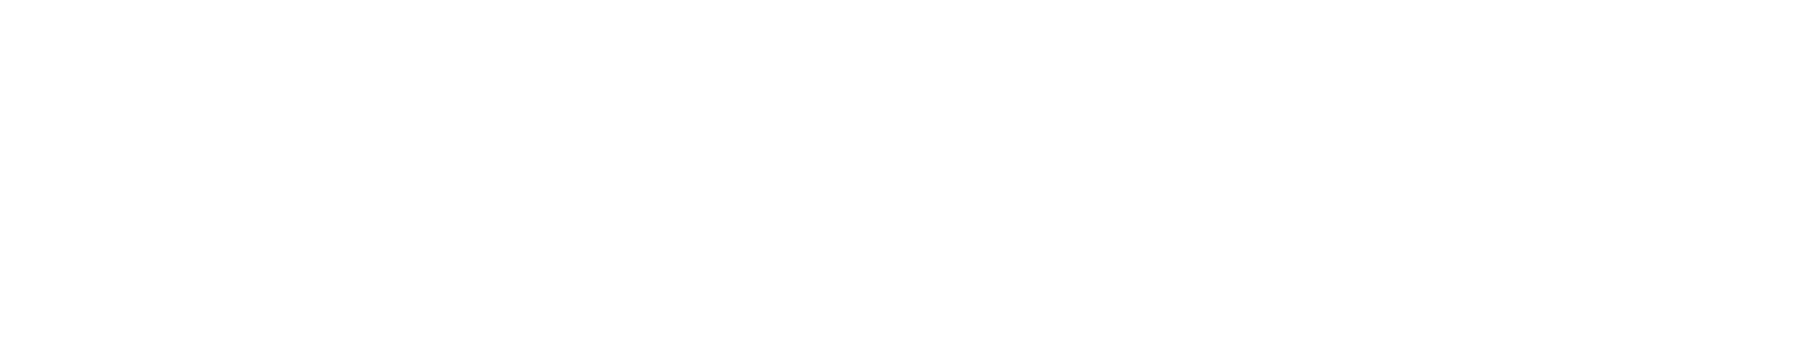 The Bourne Ultimatum logo